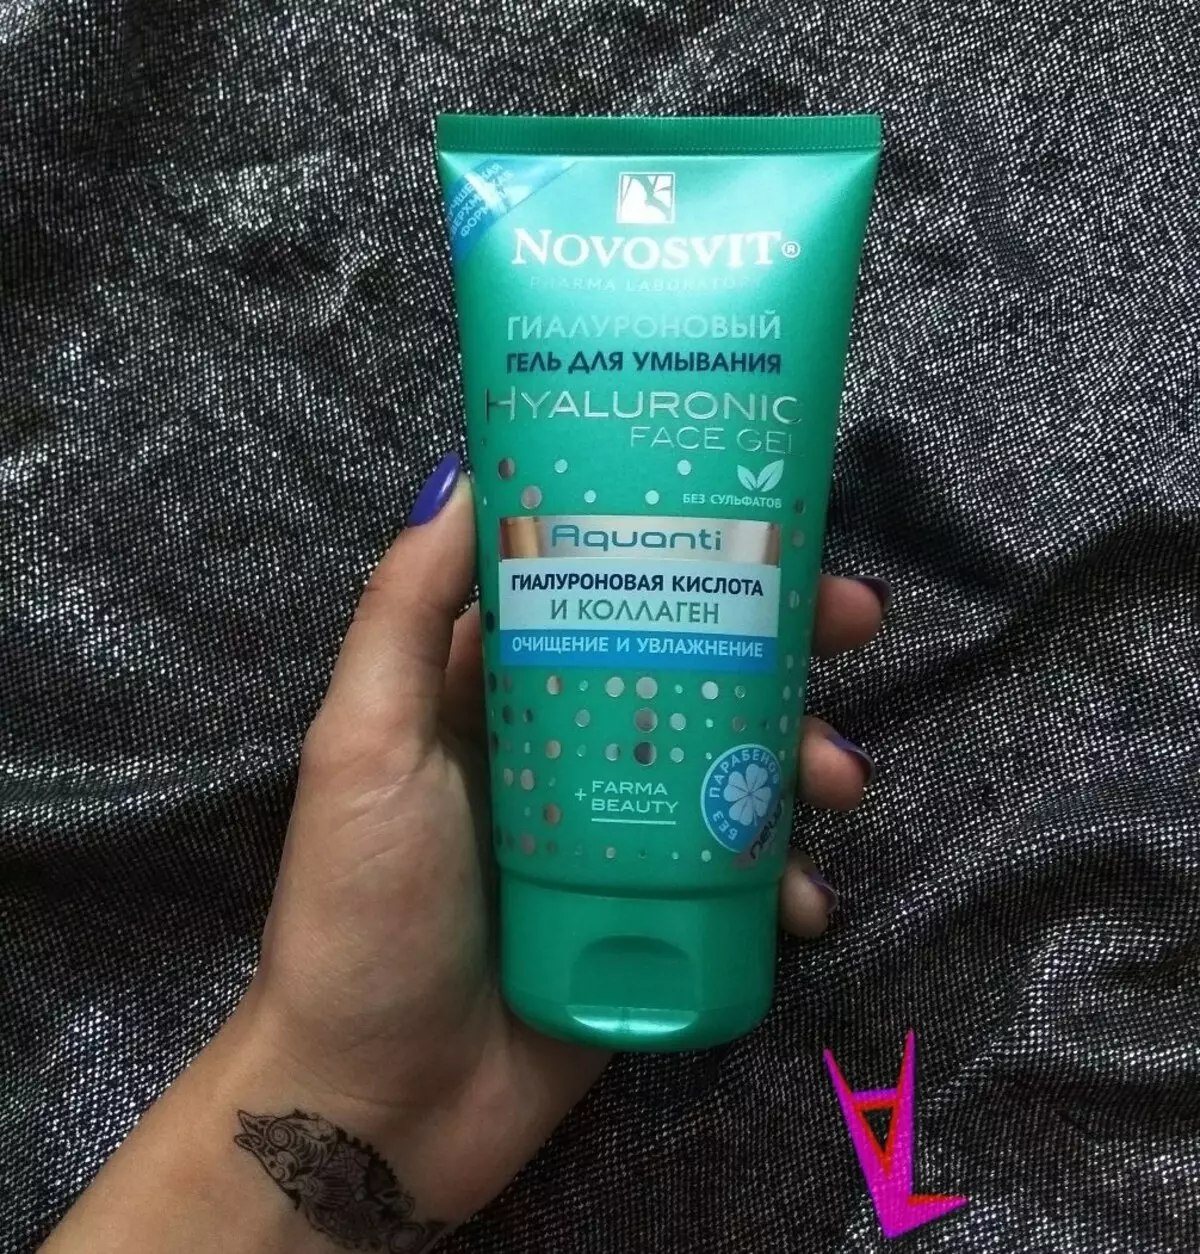 Michael Novosvit Face Προϊόντα: Νερό και λοσιόν, πλένετε gel για ευαίσθητο και άλλο δέρμα. Πώς να πάρει και να χρησιμοποιήσετε τα μέσα; 23906_13